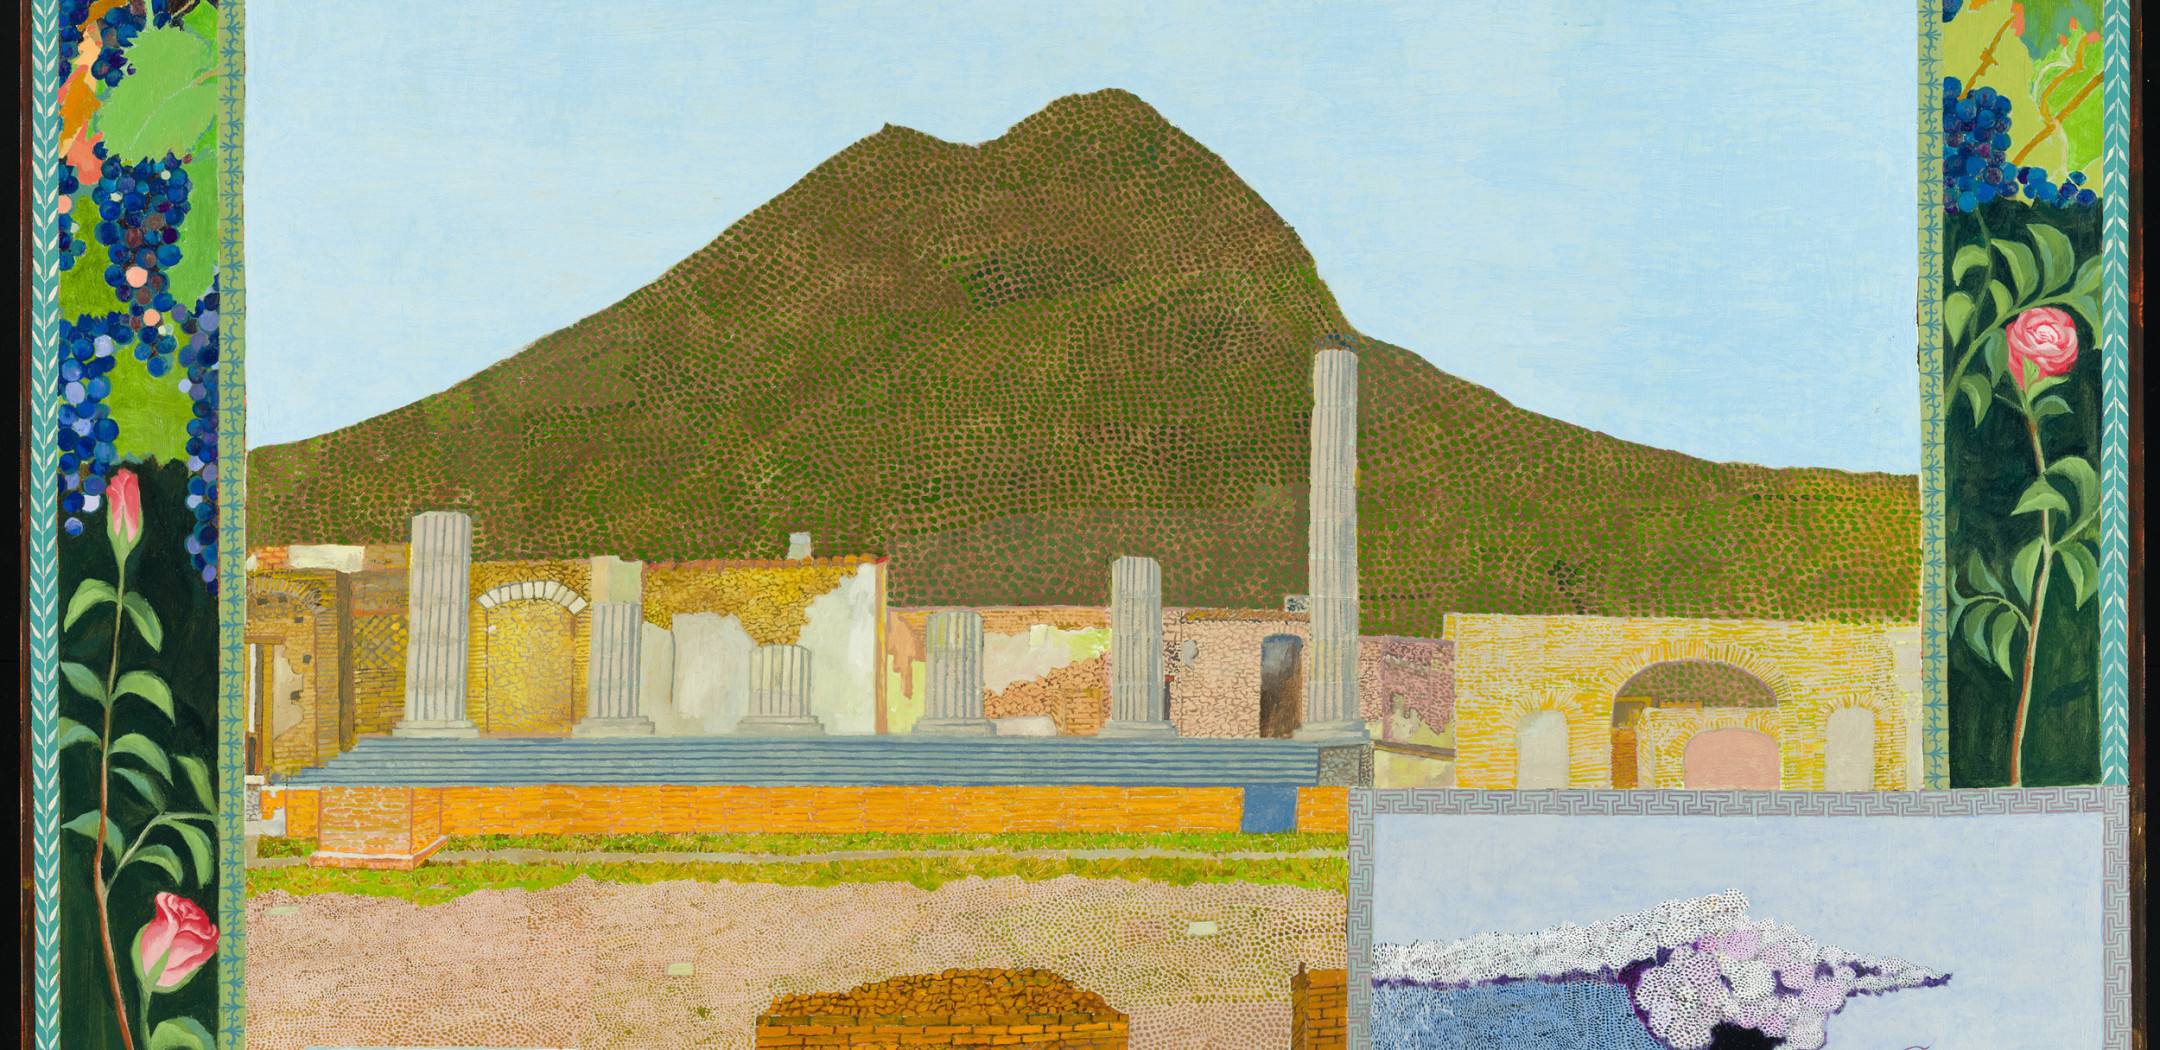 David McDermott painting of the Vesuvio